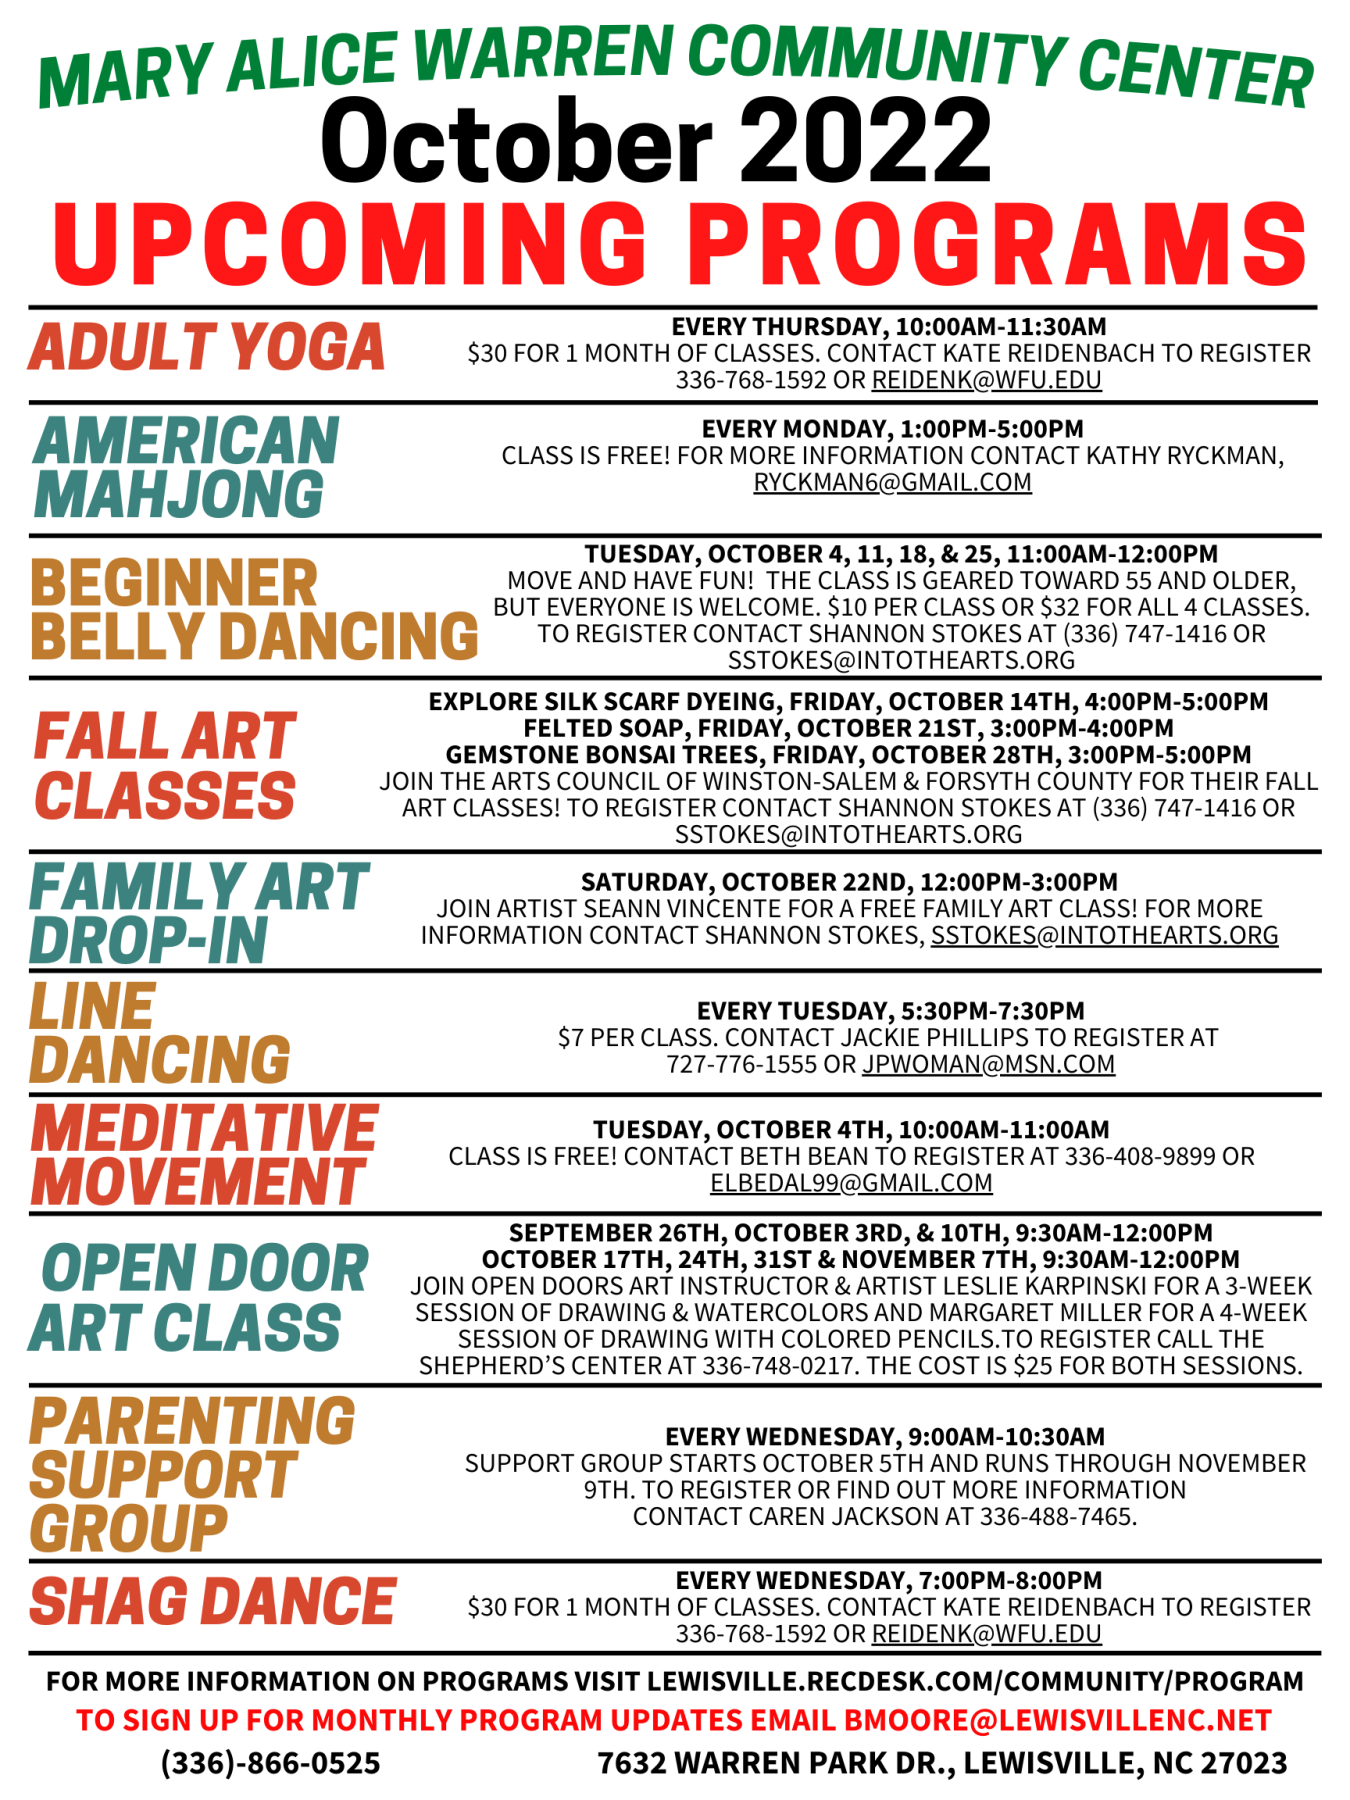 MAWCC October Programs